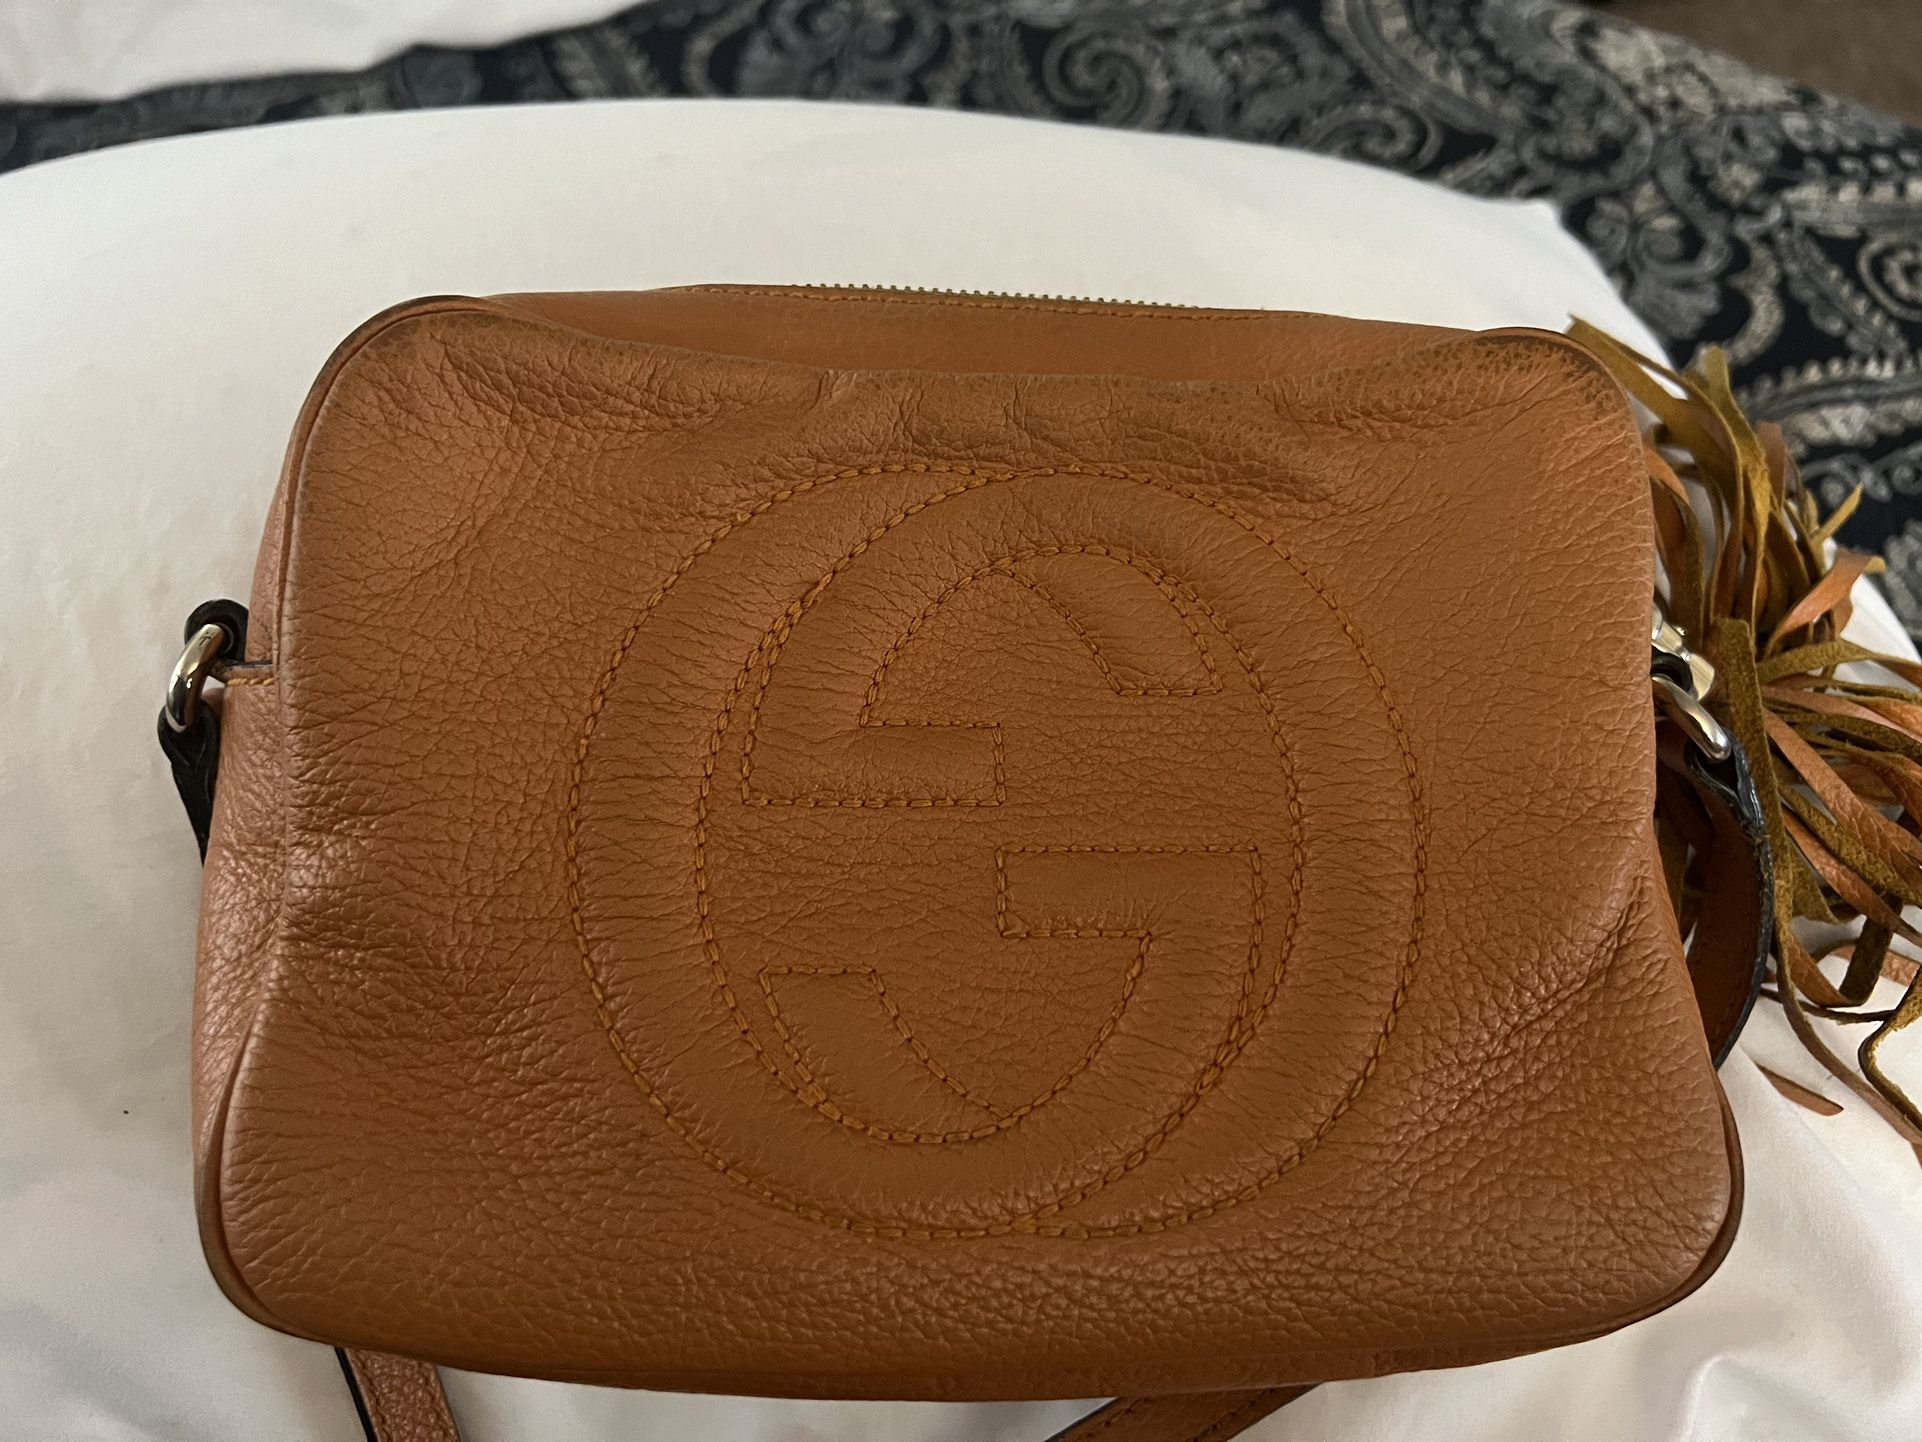 Authentic Gucci Soho Handbag 